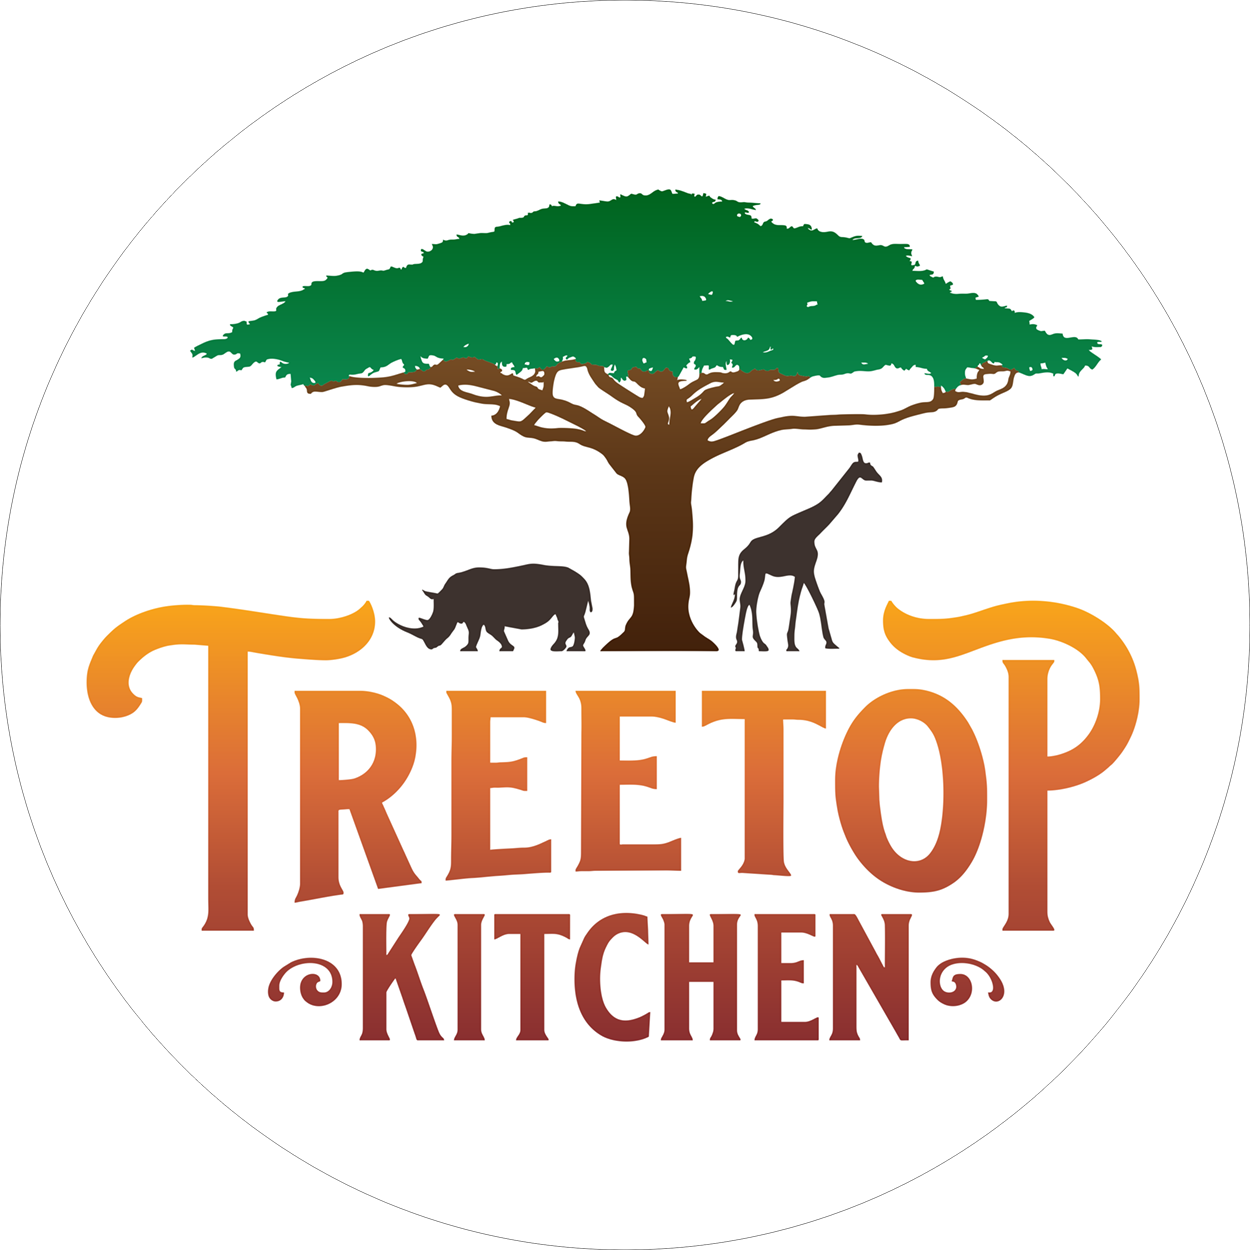 Treetop Kitchen Logo